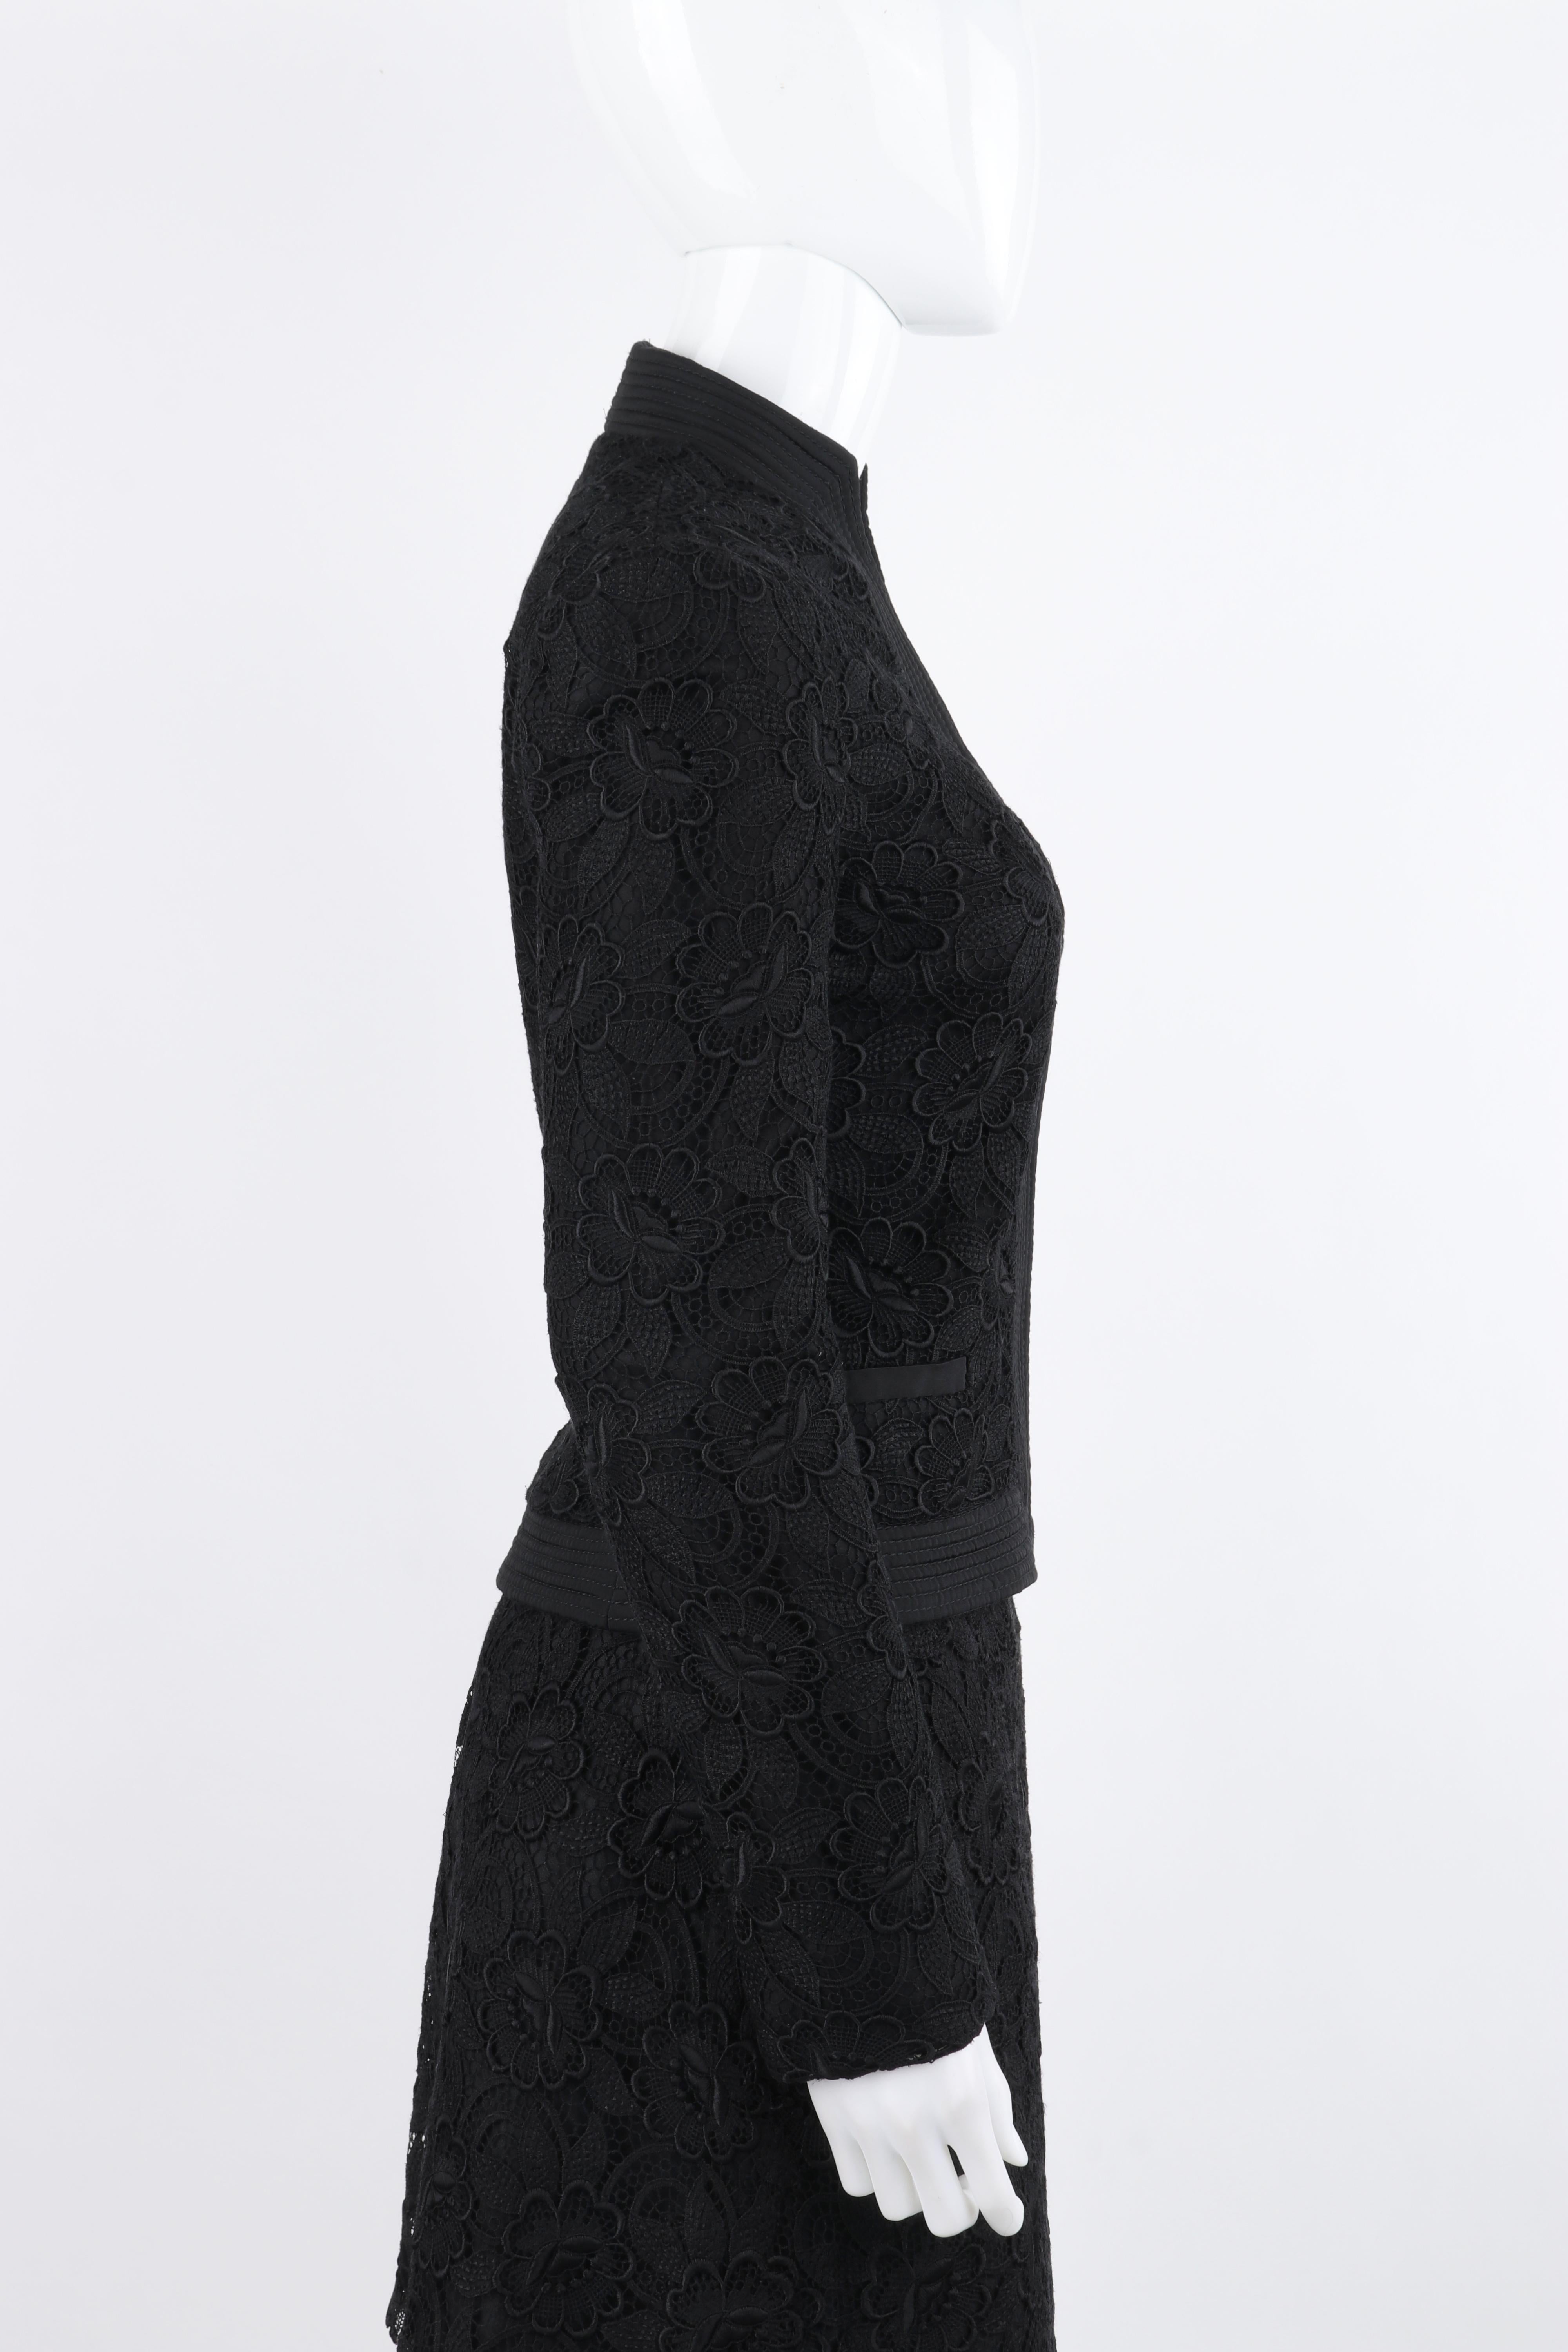 ALEXANDER McQUEEN Pre-Fall 2006 Black Two Piece Lace Jacket Skirt Suit Set For Sale 1